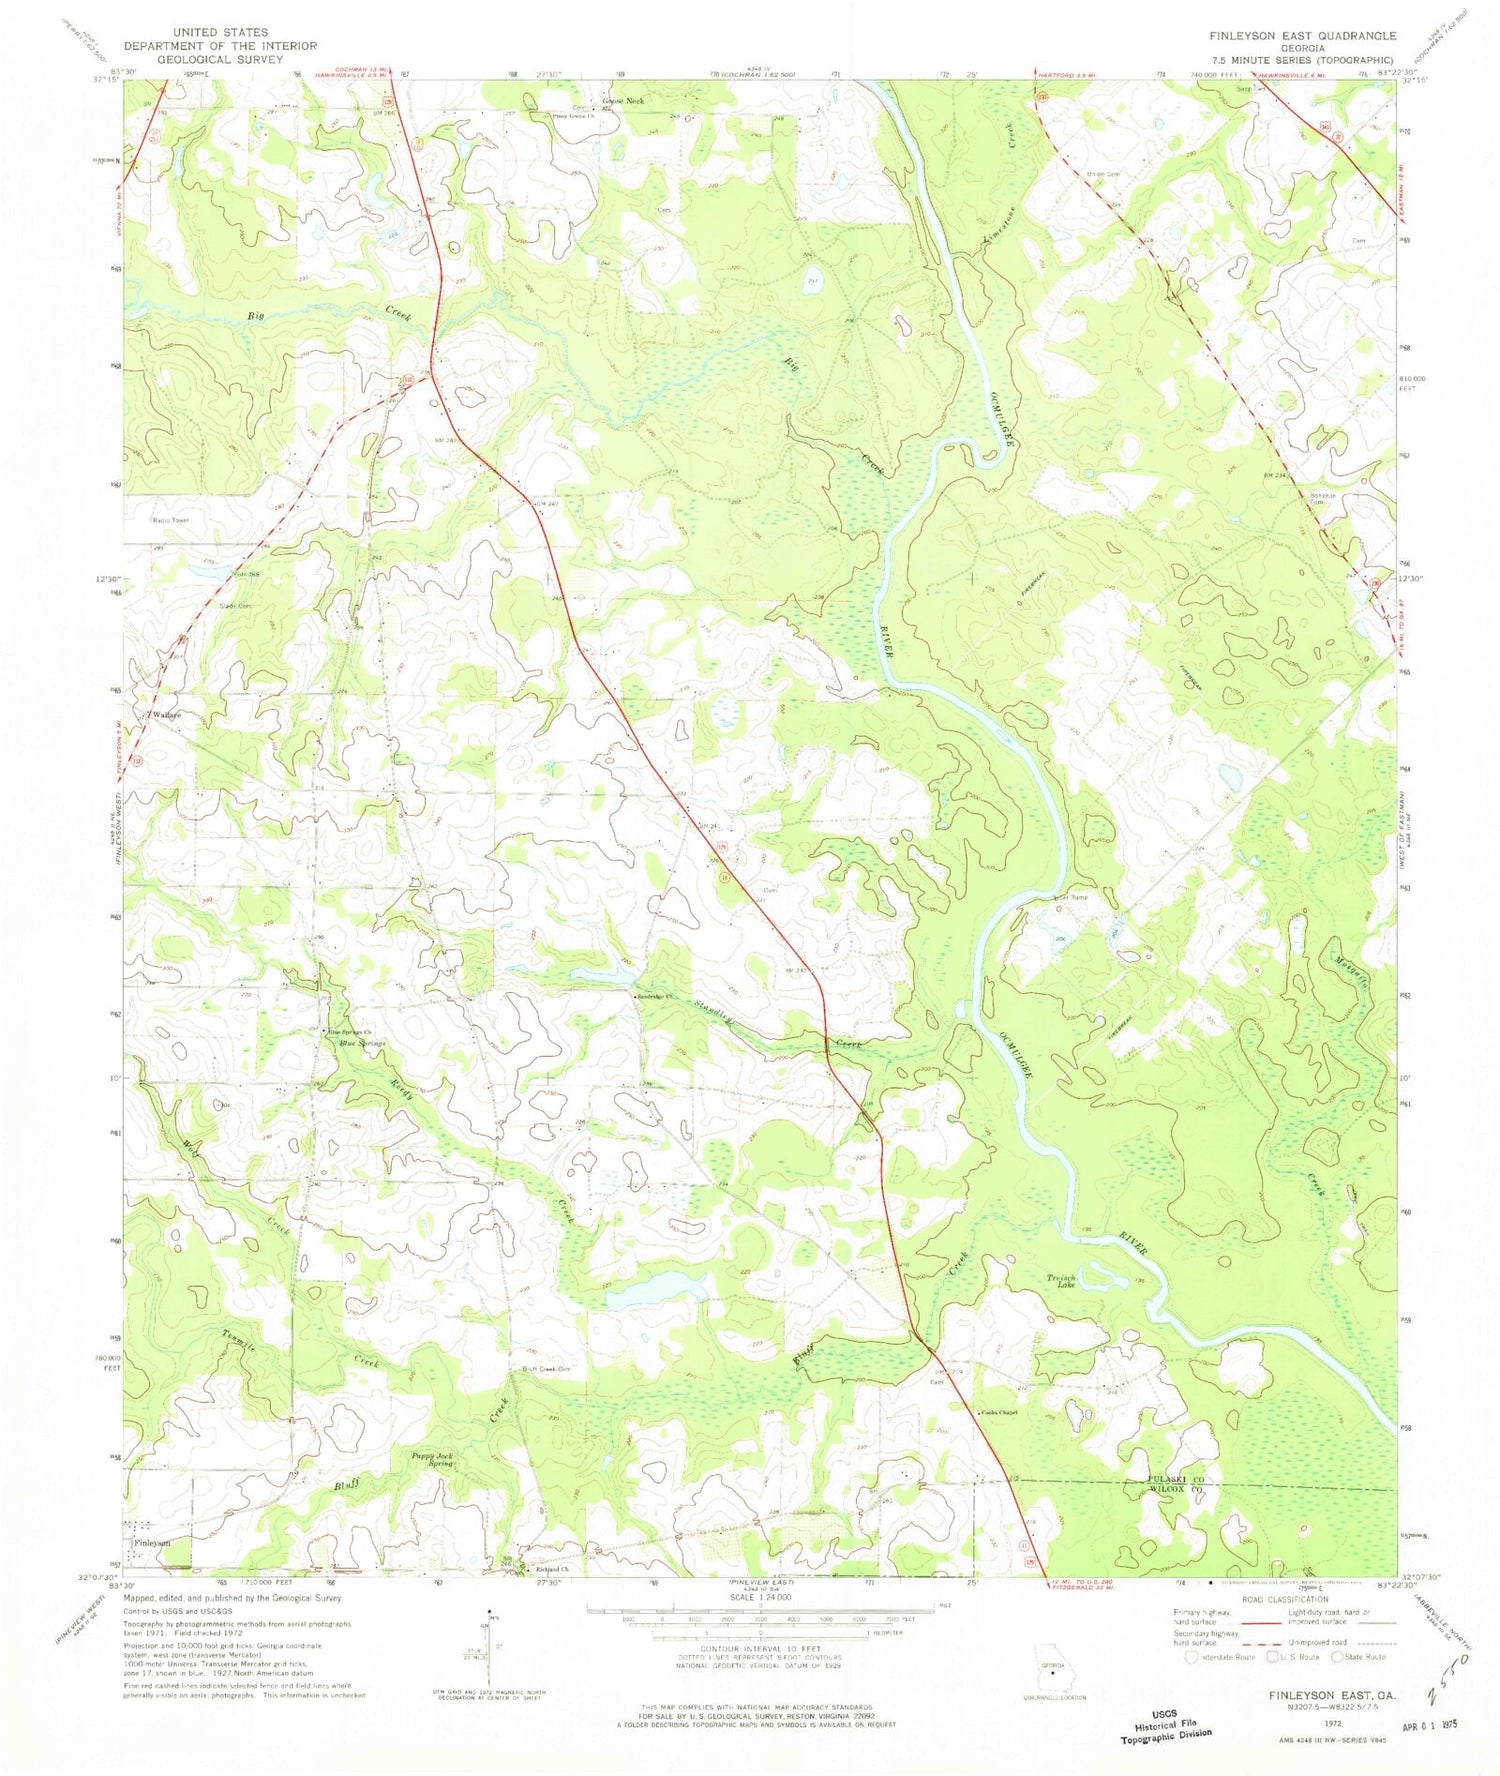 Classic USGS Finleyson East Georgia 7.5'x7.5' Topo Map Image